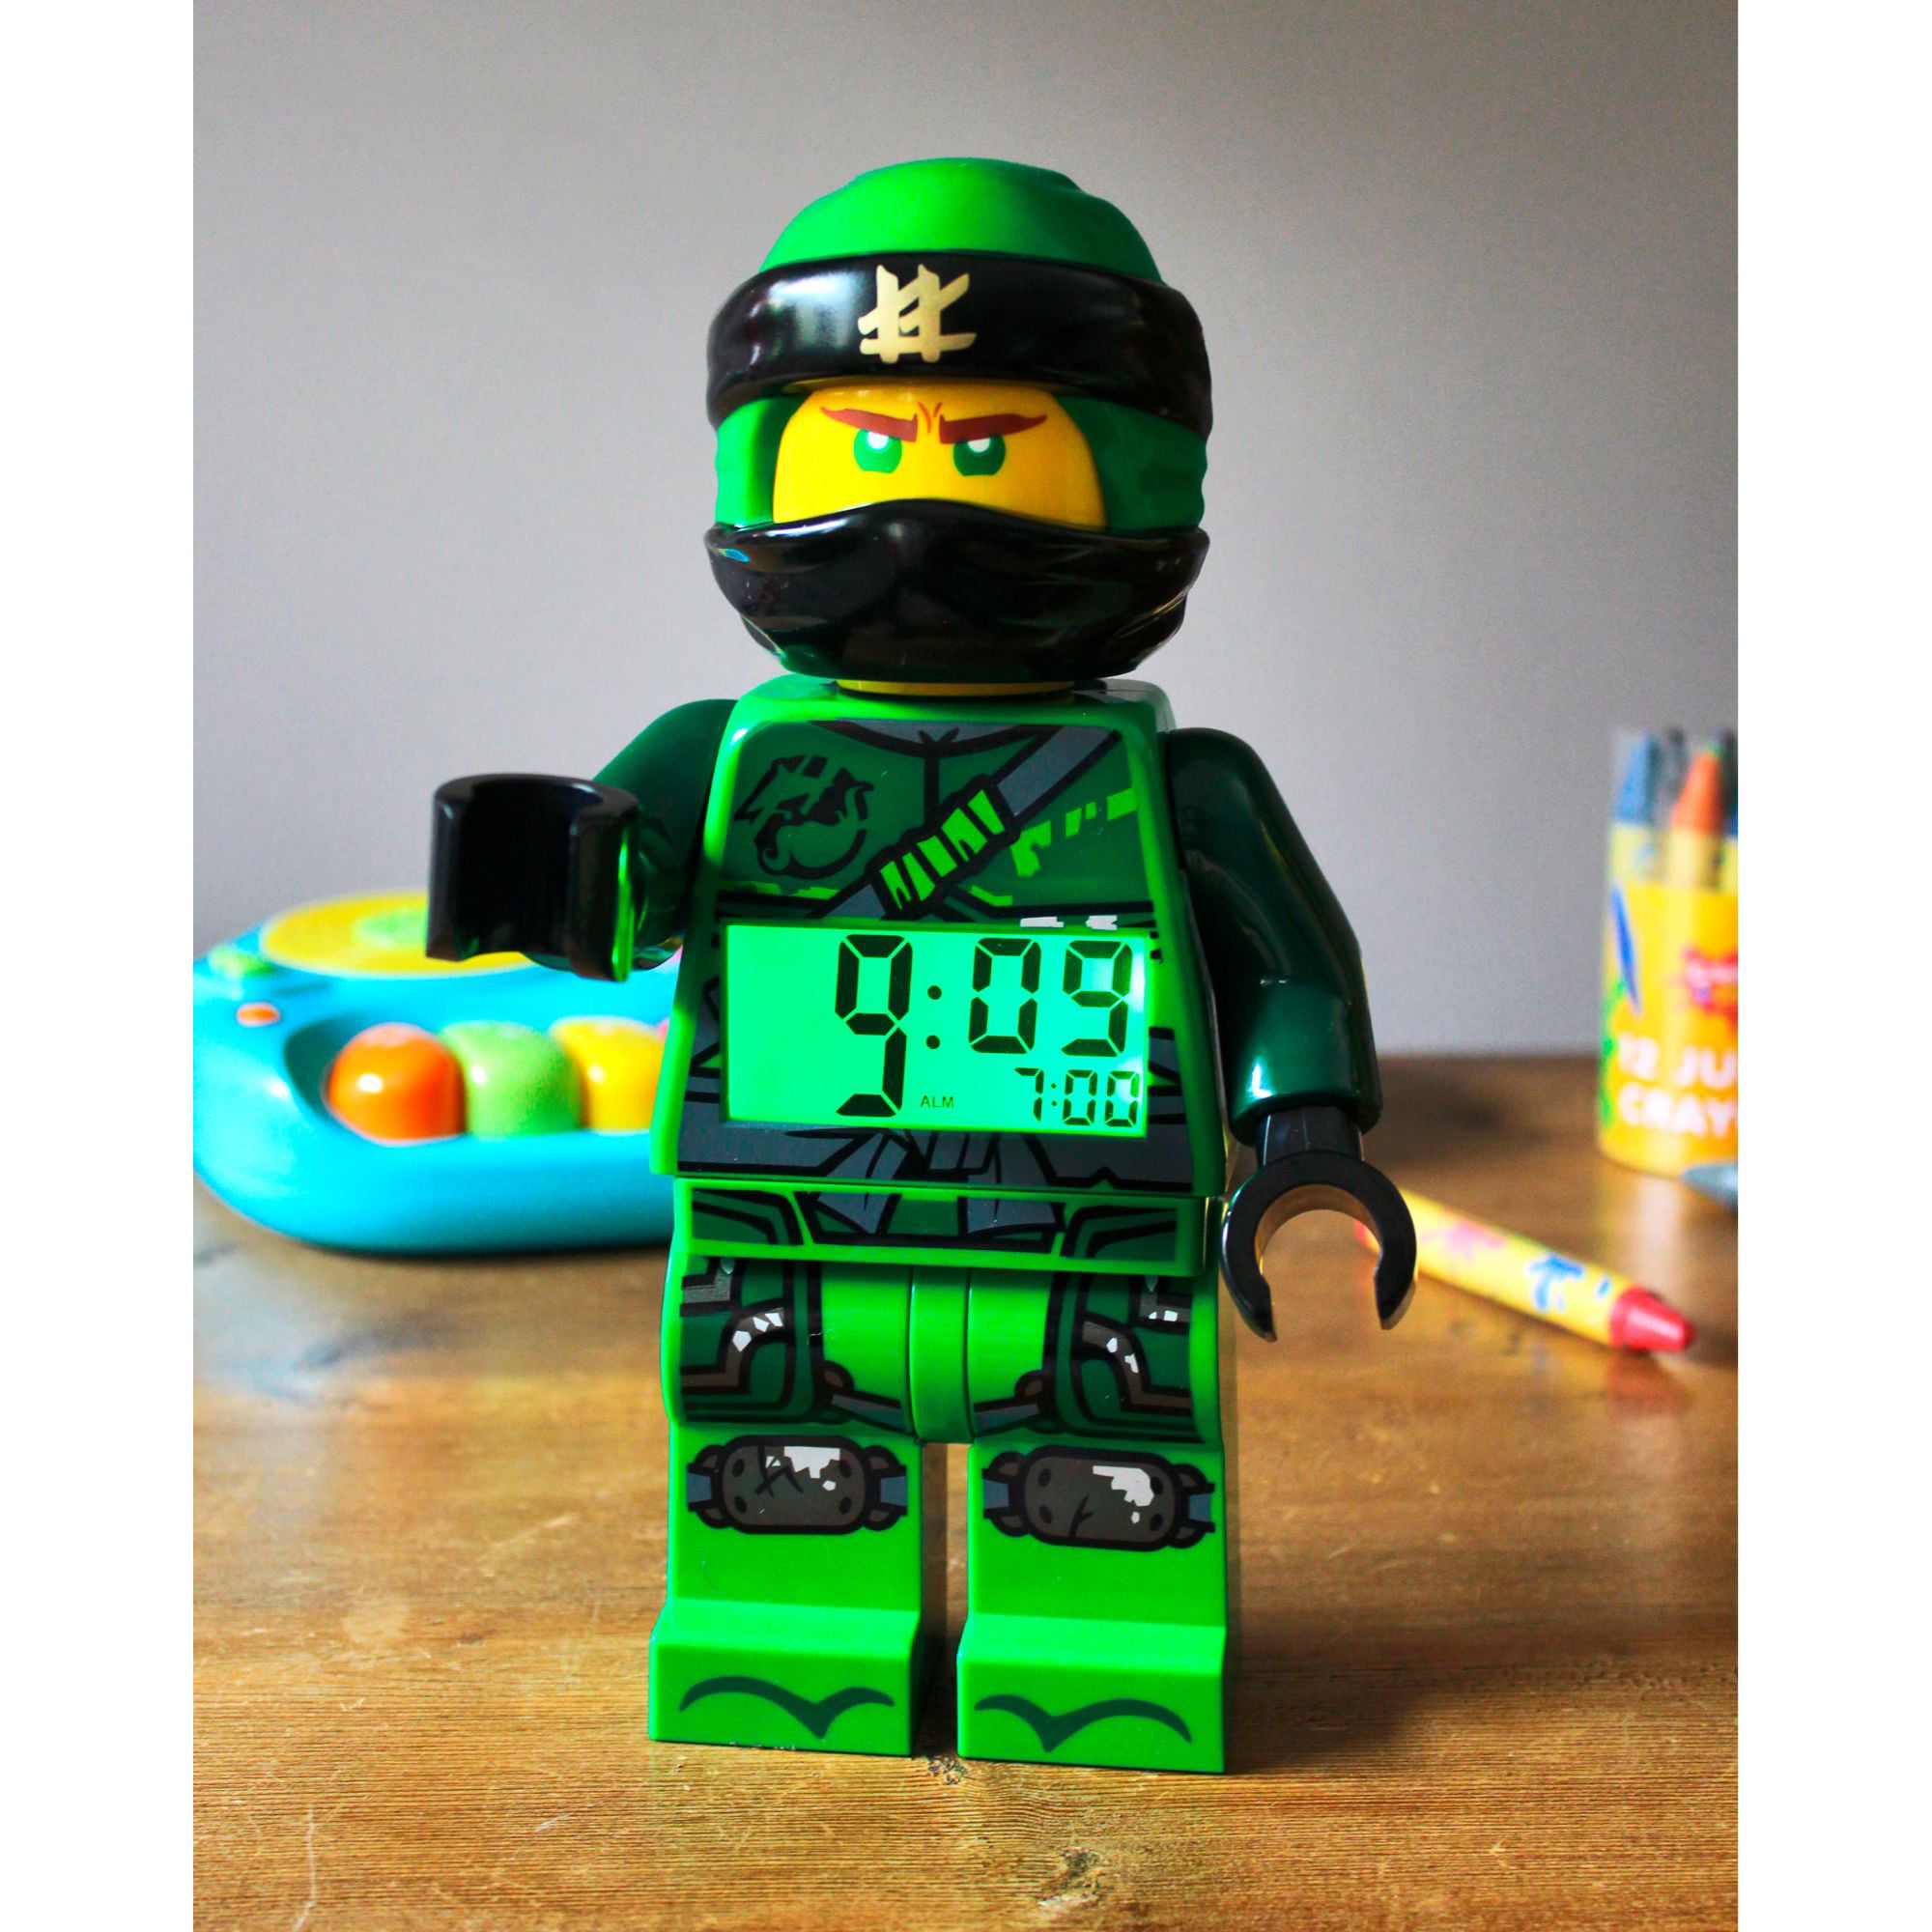 Lego Ninja Ninjago Alarm Desk Clock 3.75" Home or Office Decor Z24 Nice For Gift 